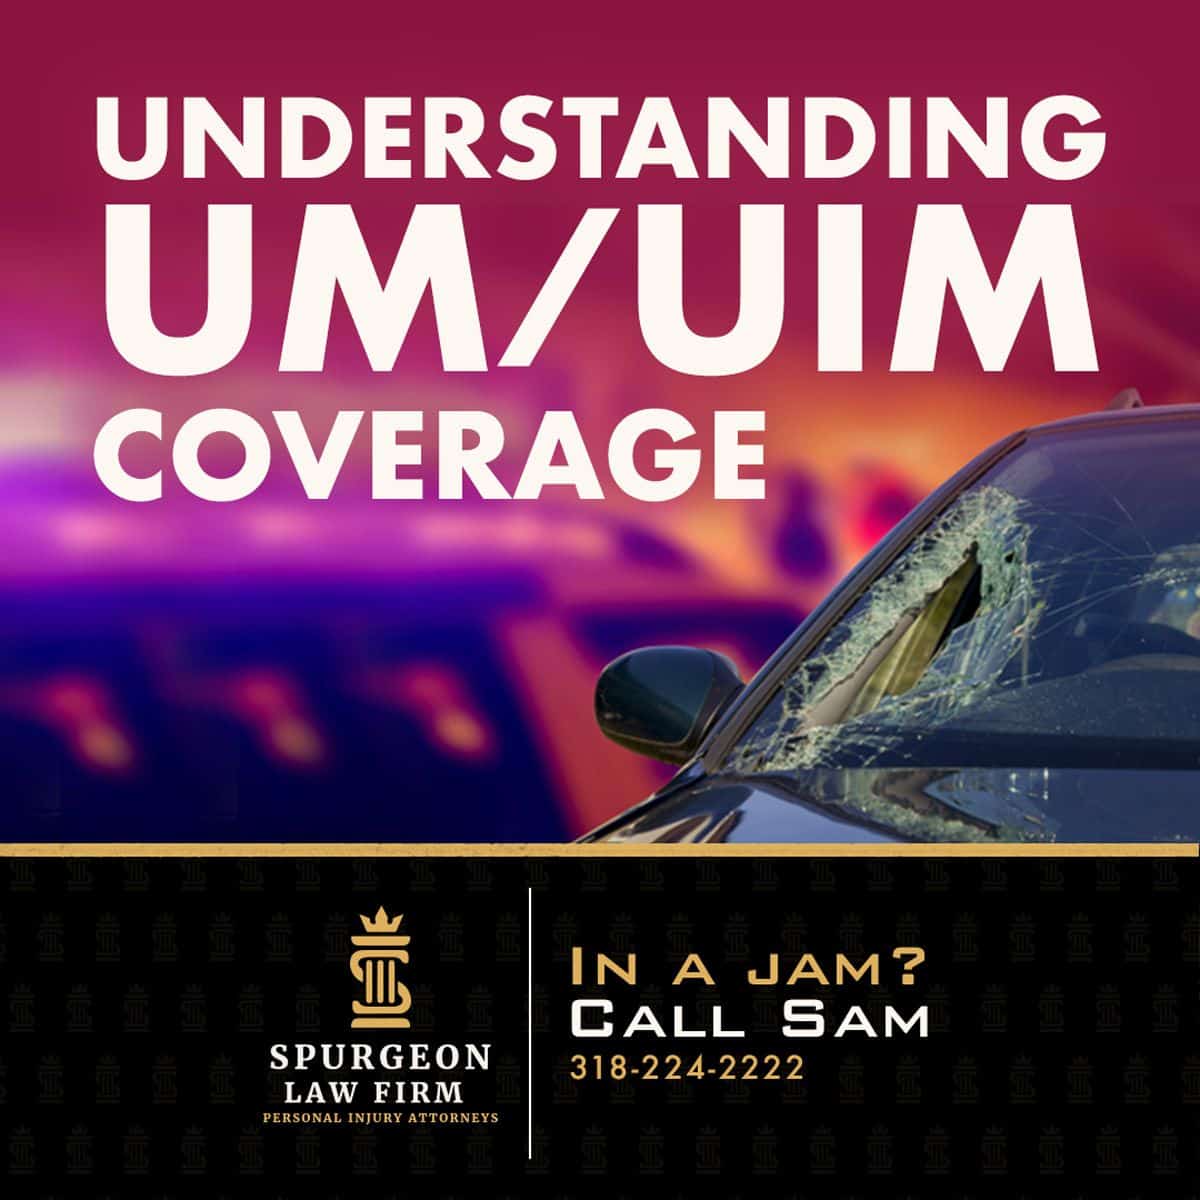 Understanding UM/UIM coverage with Spurgeon law Firm